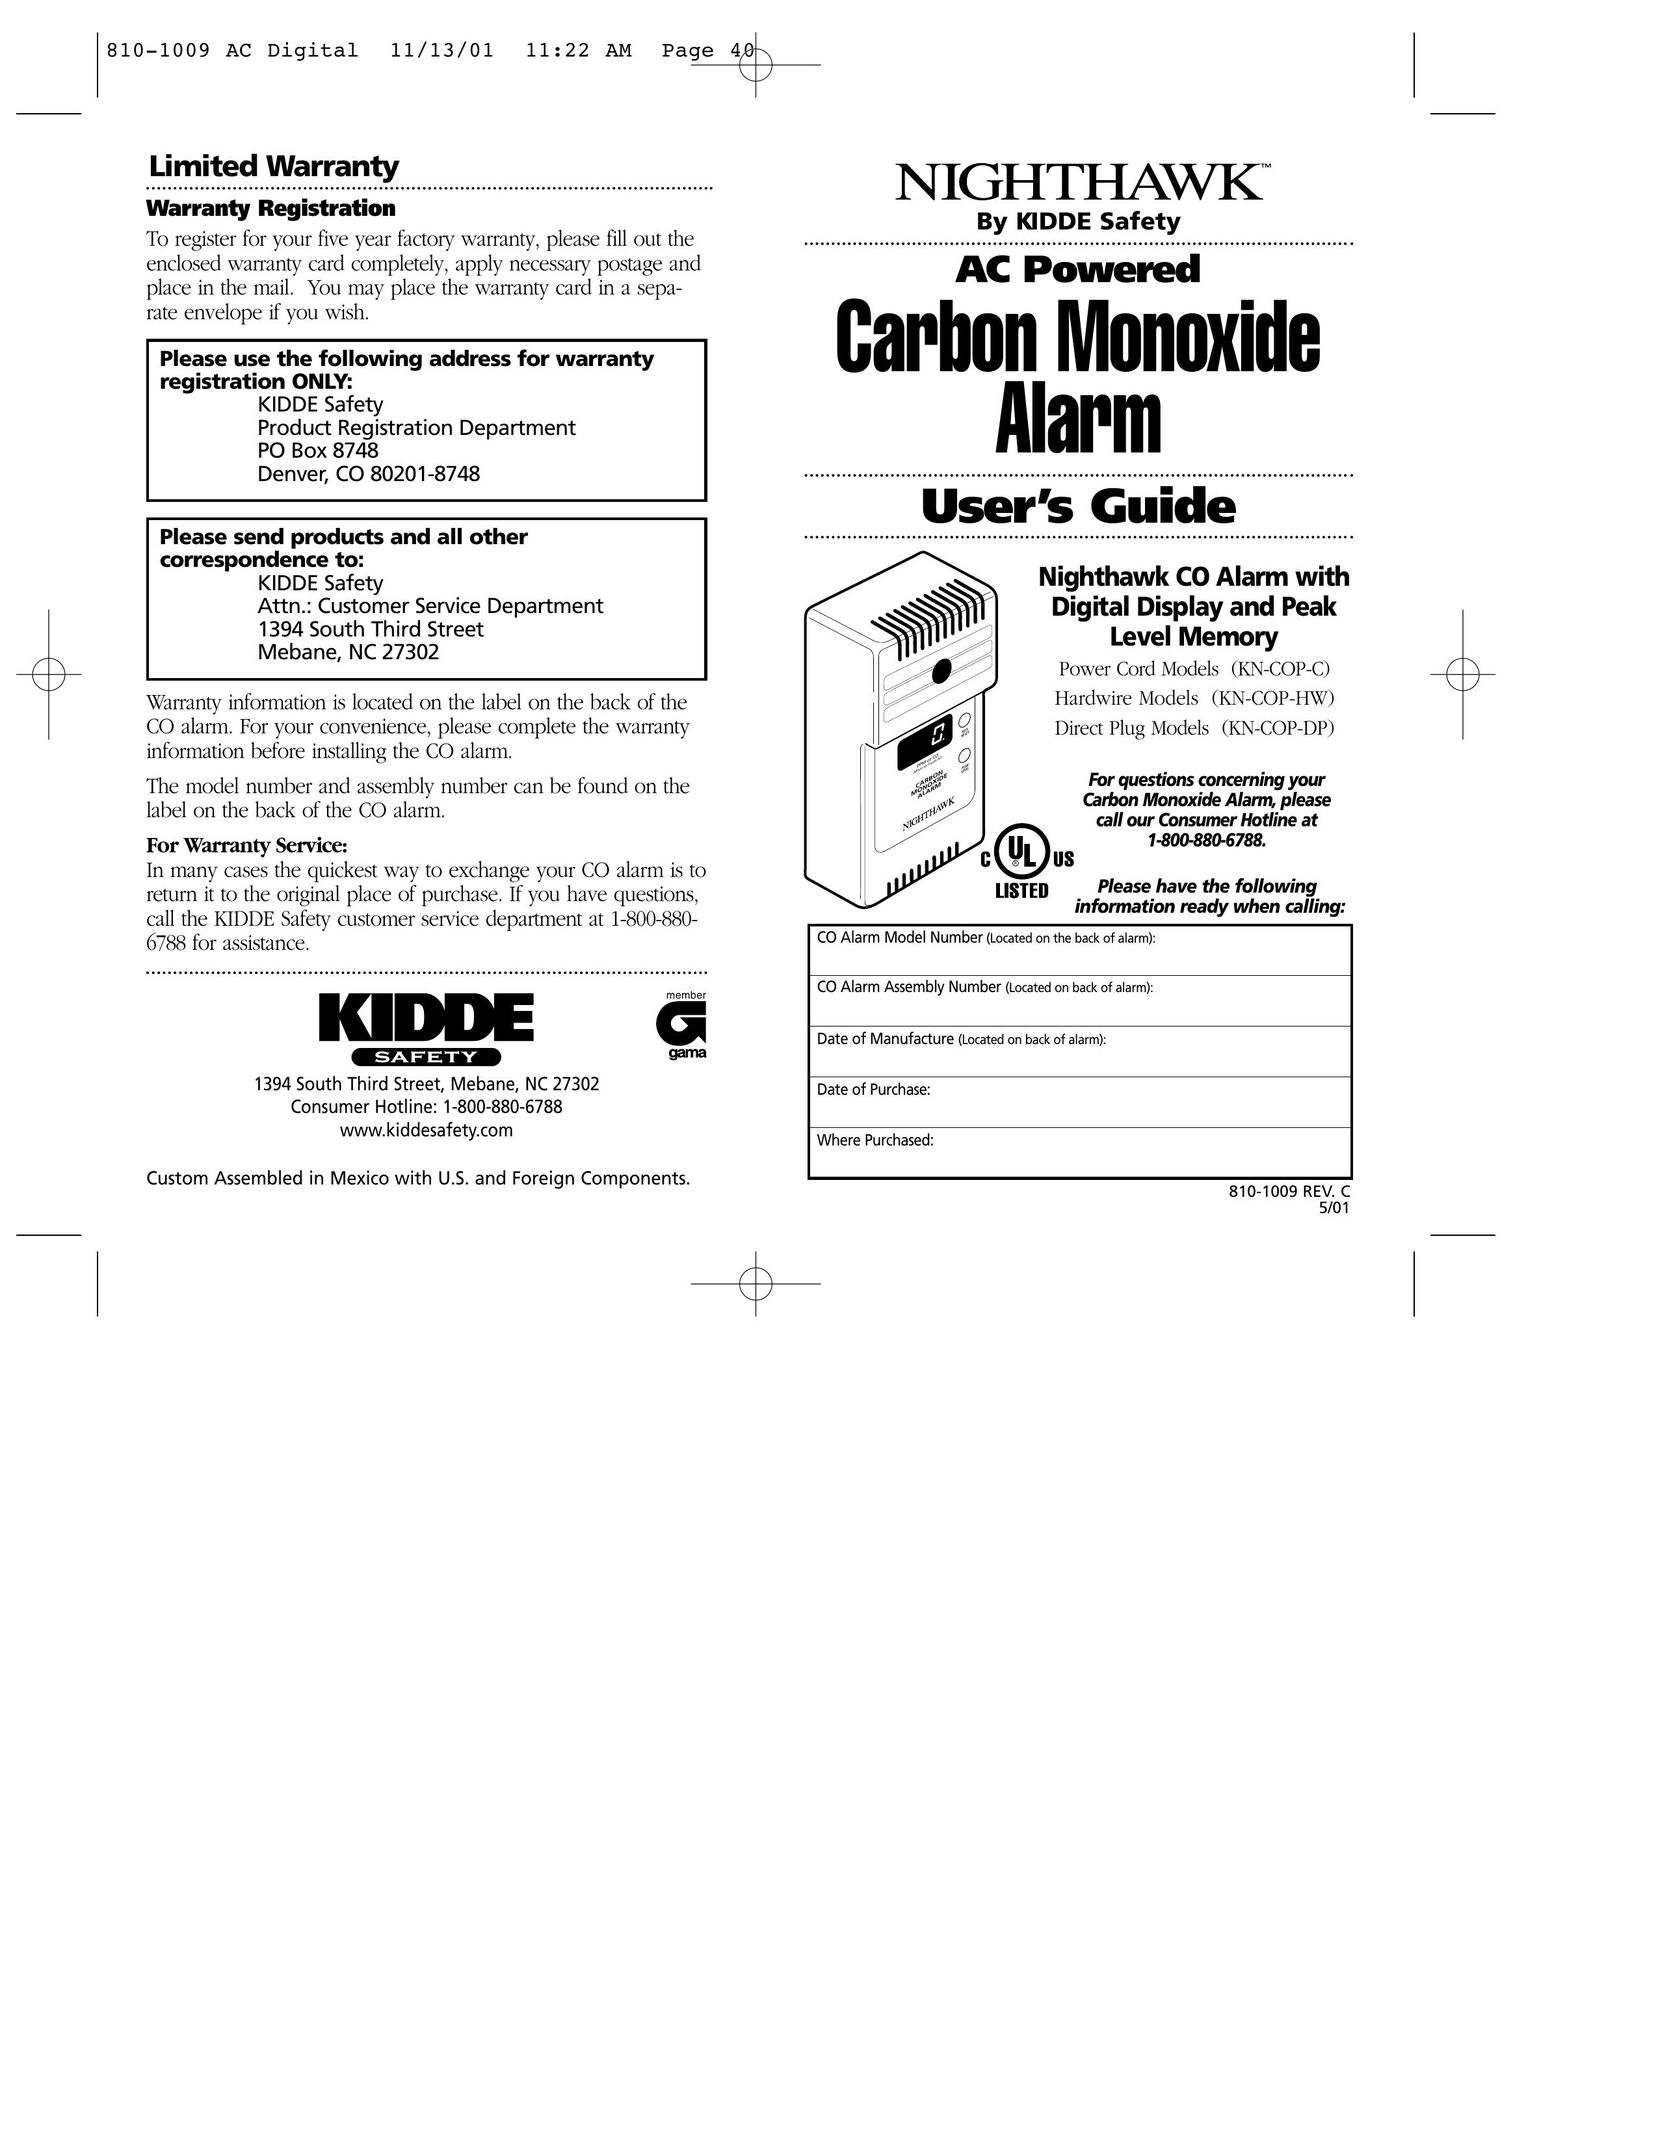 Nighthawk KN-COP-DP Carbon Monoxide Alarm User Manual